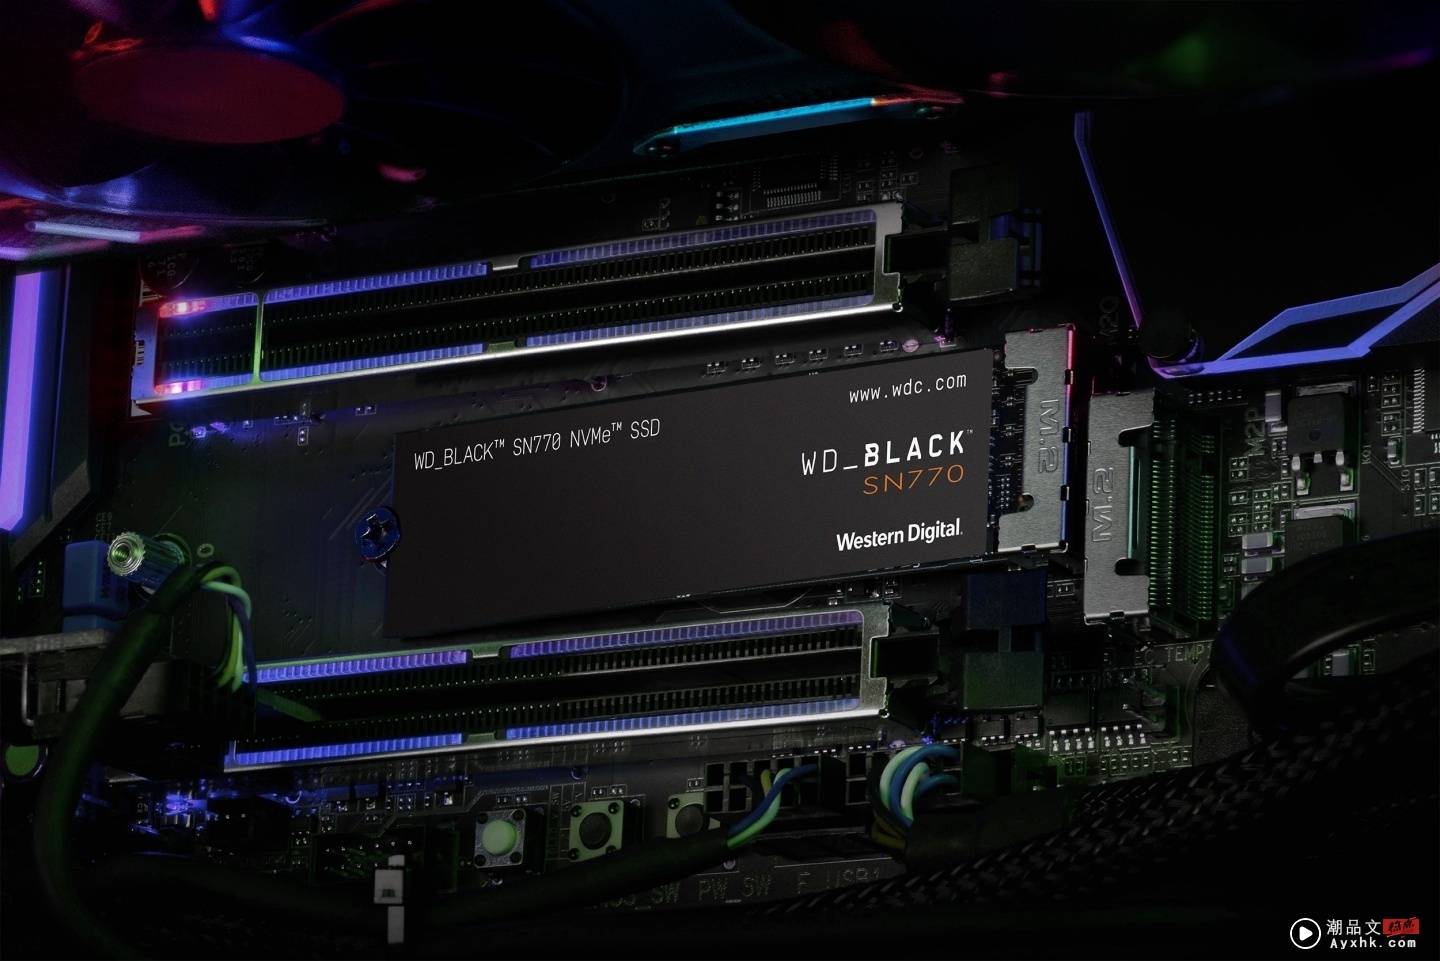 Western Digital 全新 WD_BLACK SN770 NVMe SSD 登台！要让 PC 玩家的游戏体验更升级 数码科技 图1张